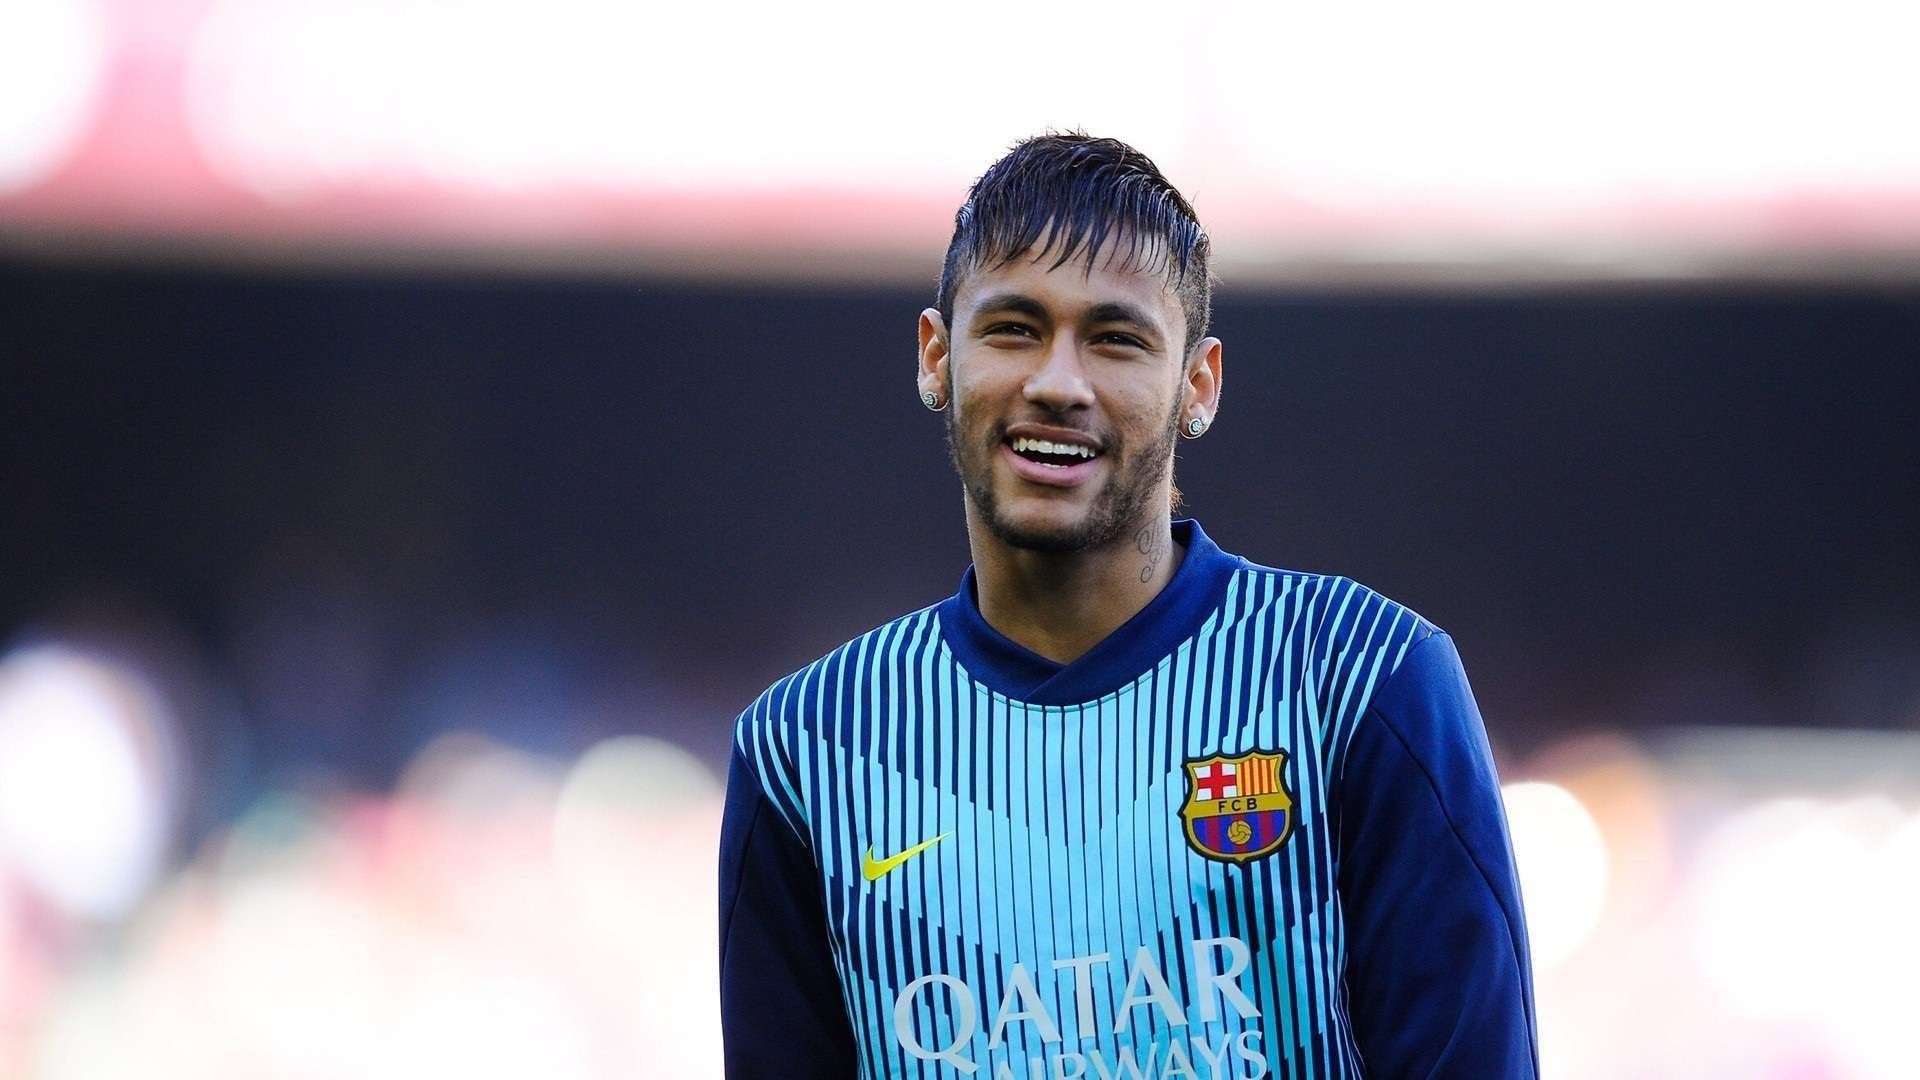 neymar jr smiling wallpaper 1080p. Neymar jr, Neymar, Neymar jr wallpaper